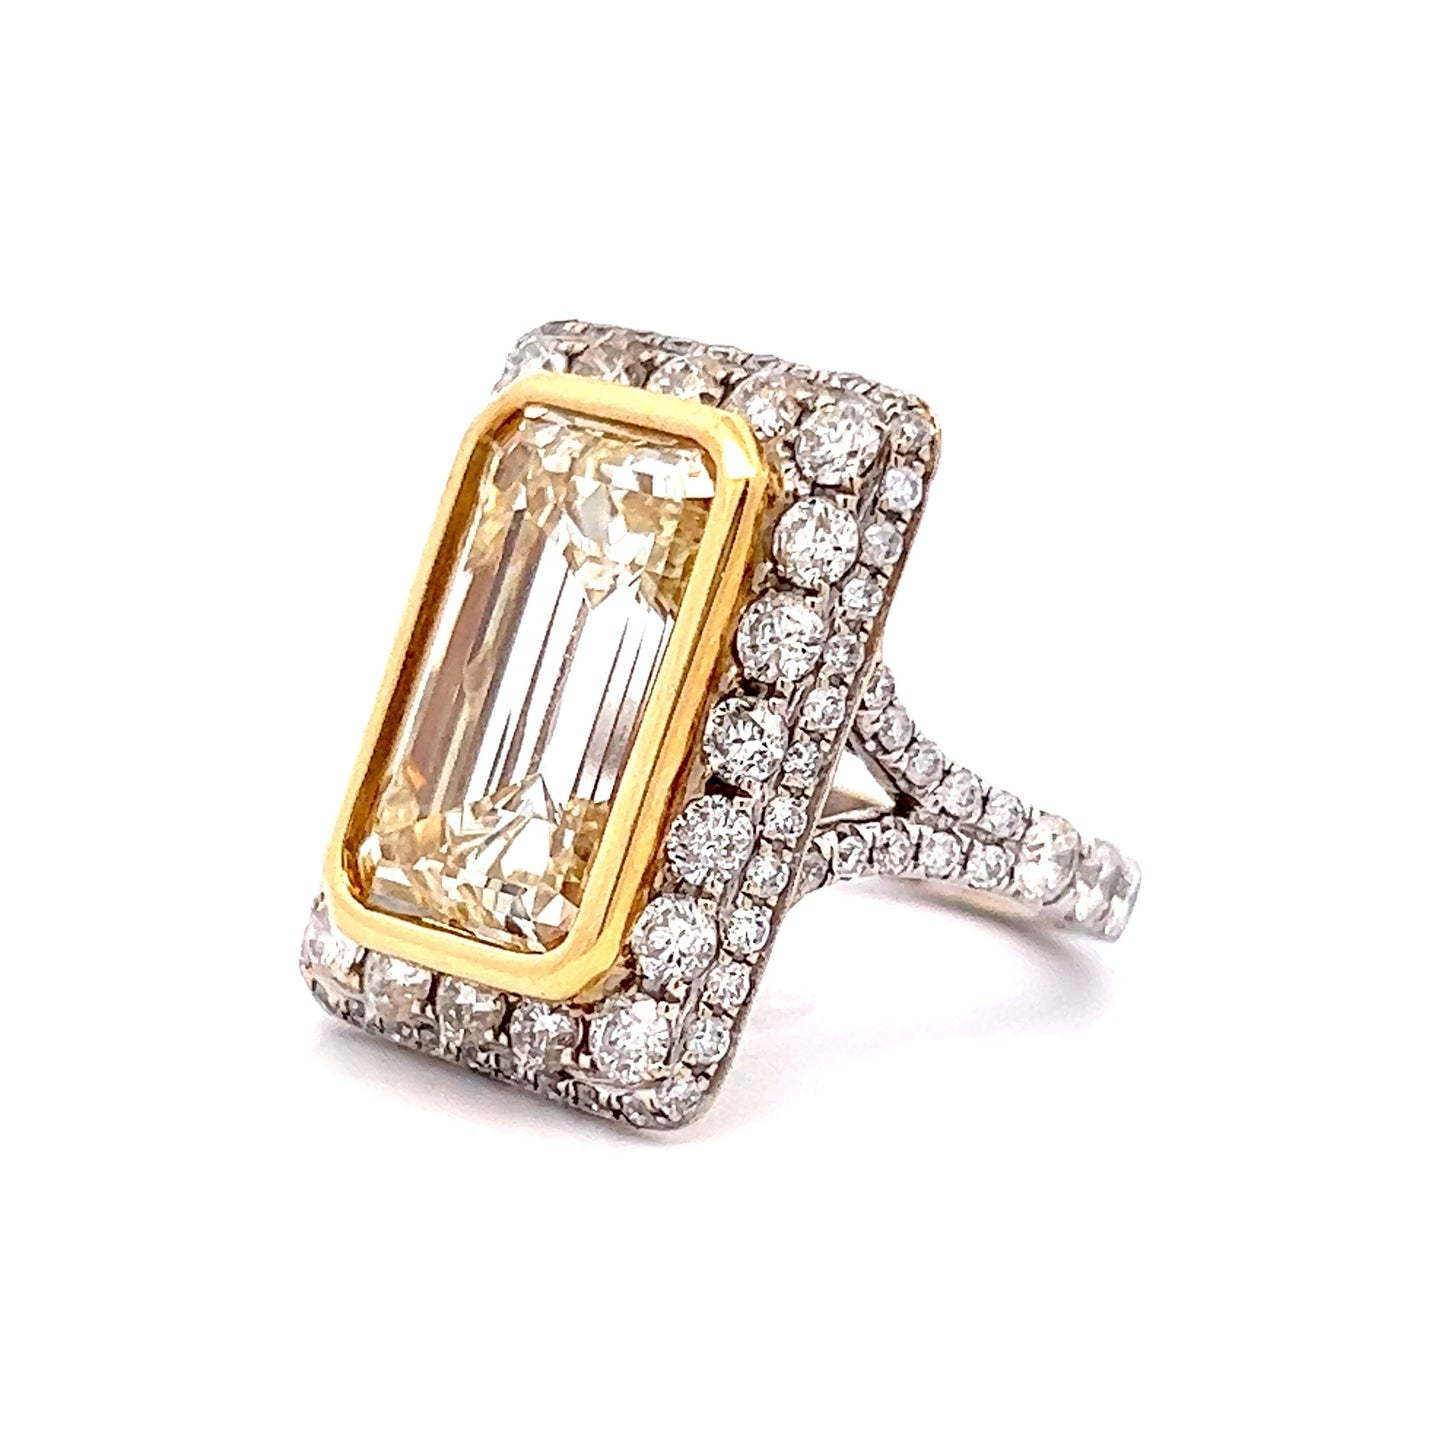 7 Carat Emerald Cut Diamond Engagement Ring in 18k